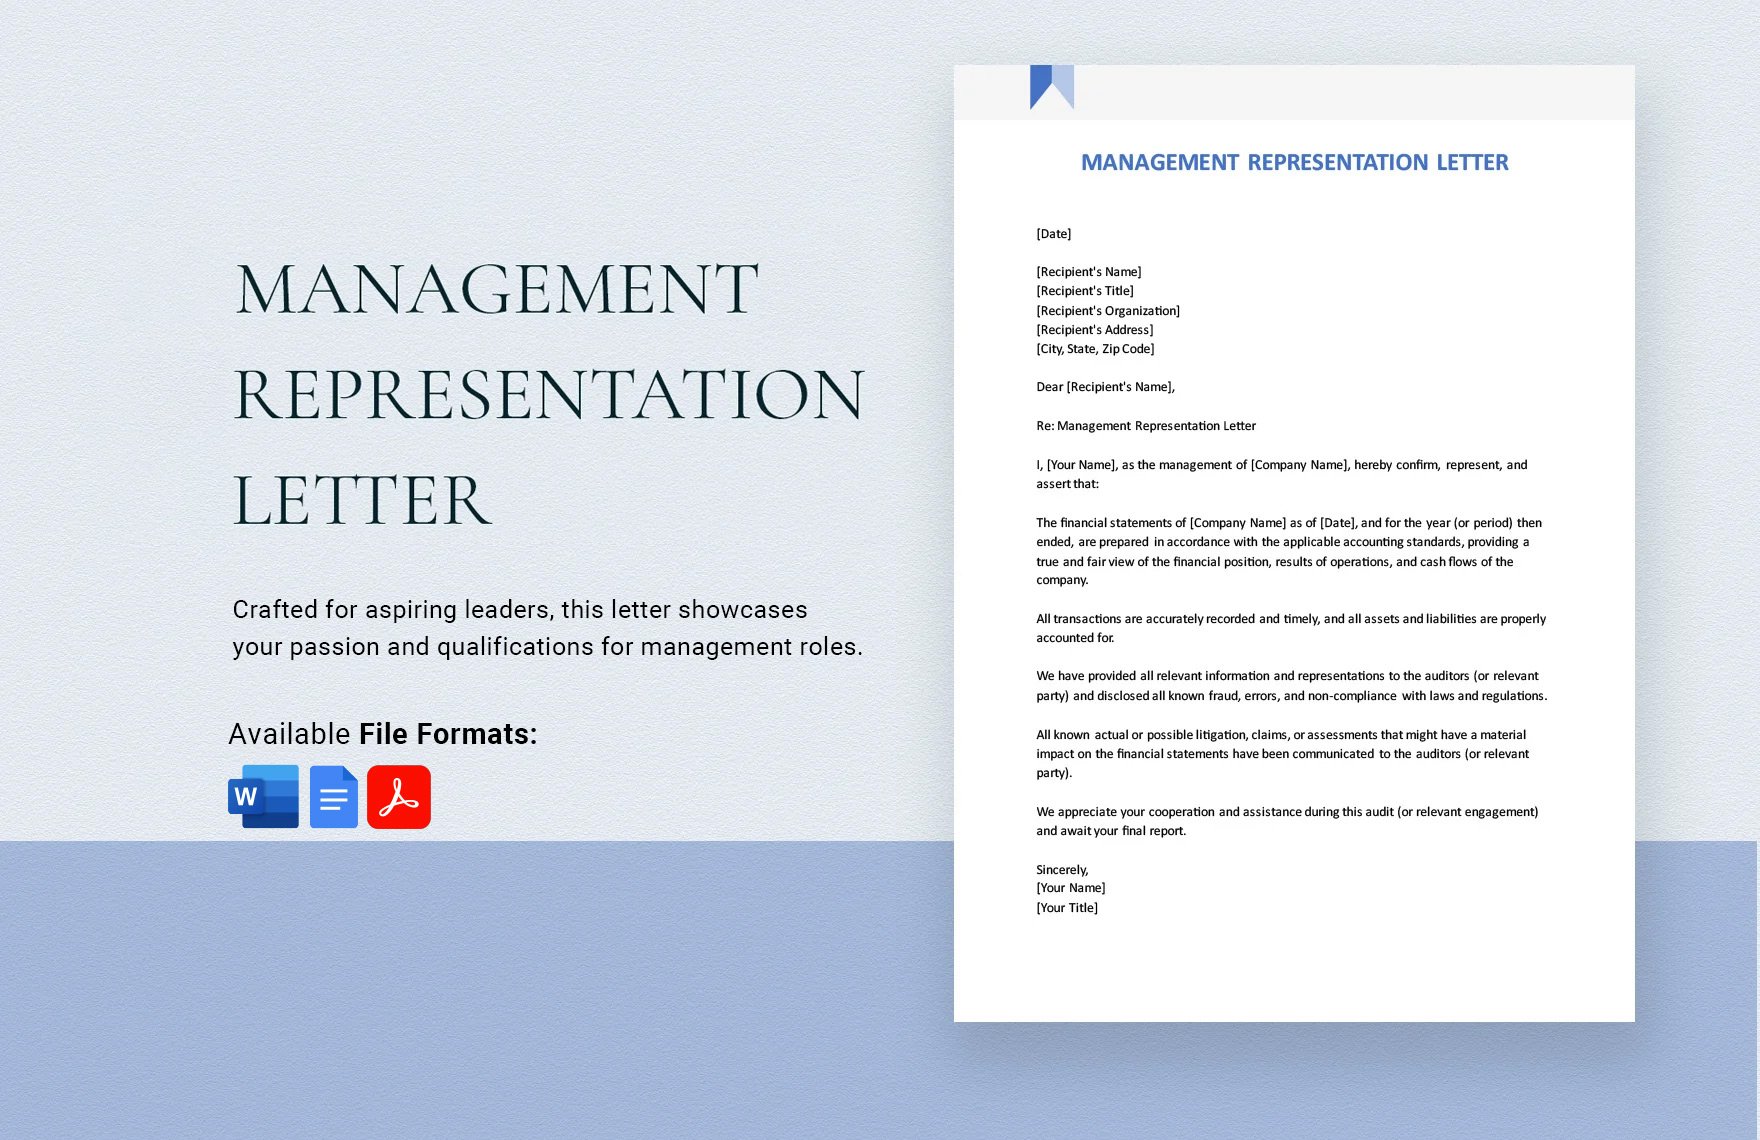 Management Representation Letter in Word, Google Docs, PDF